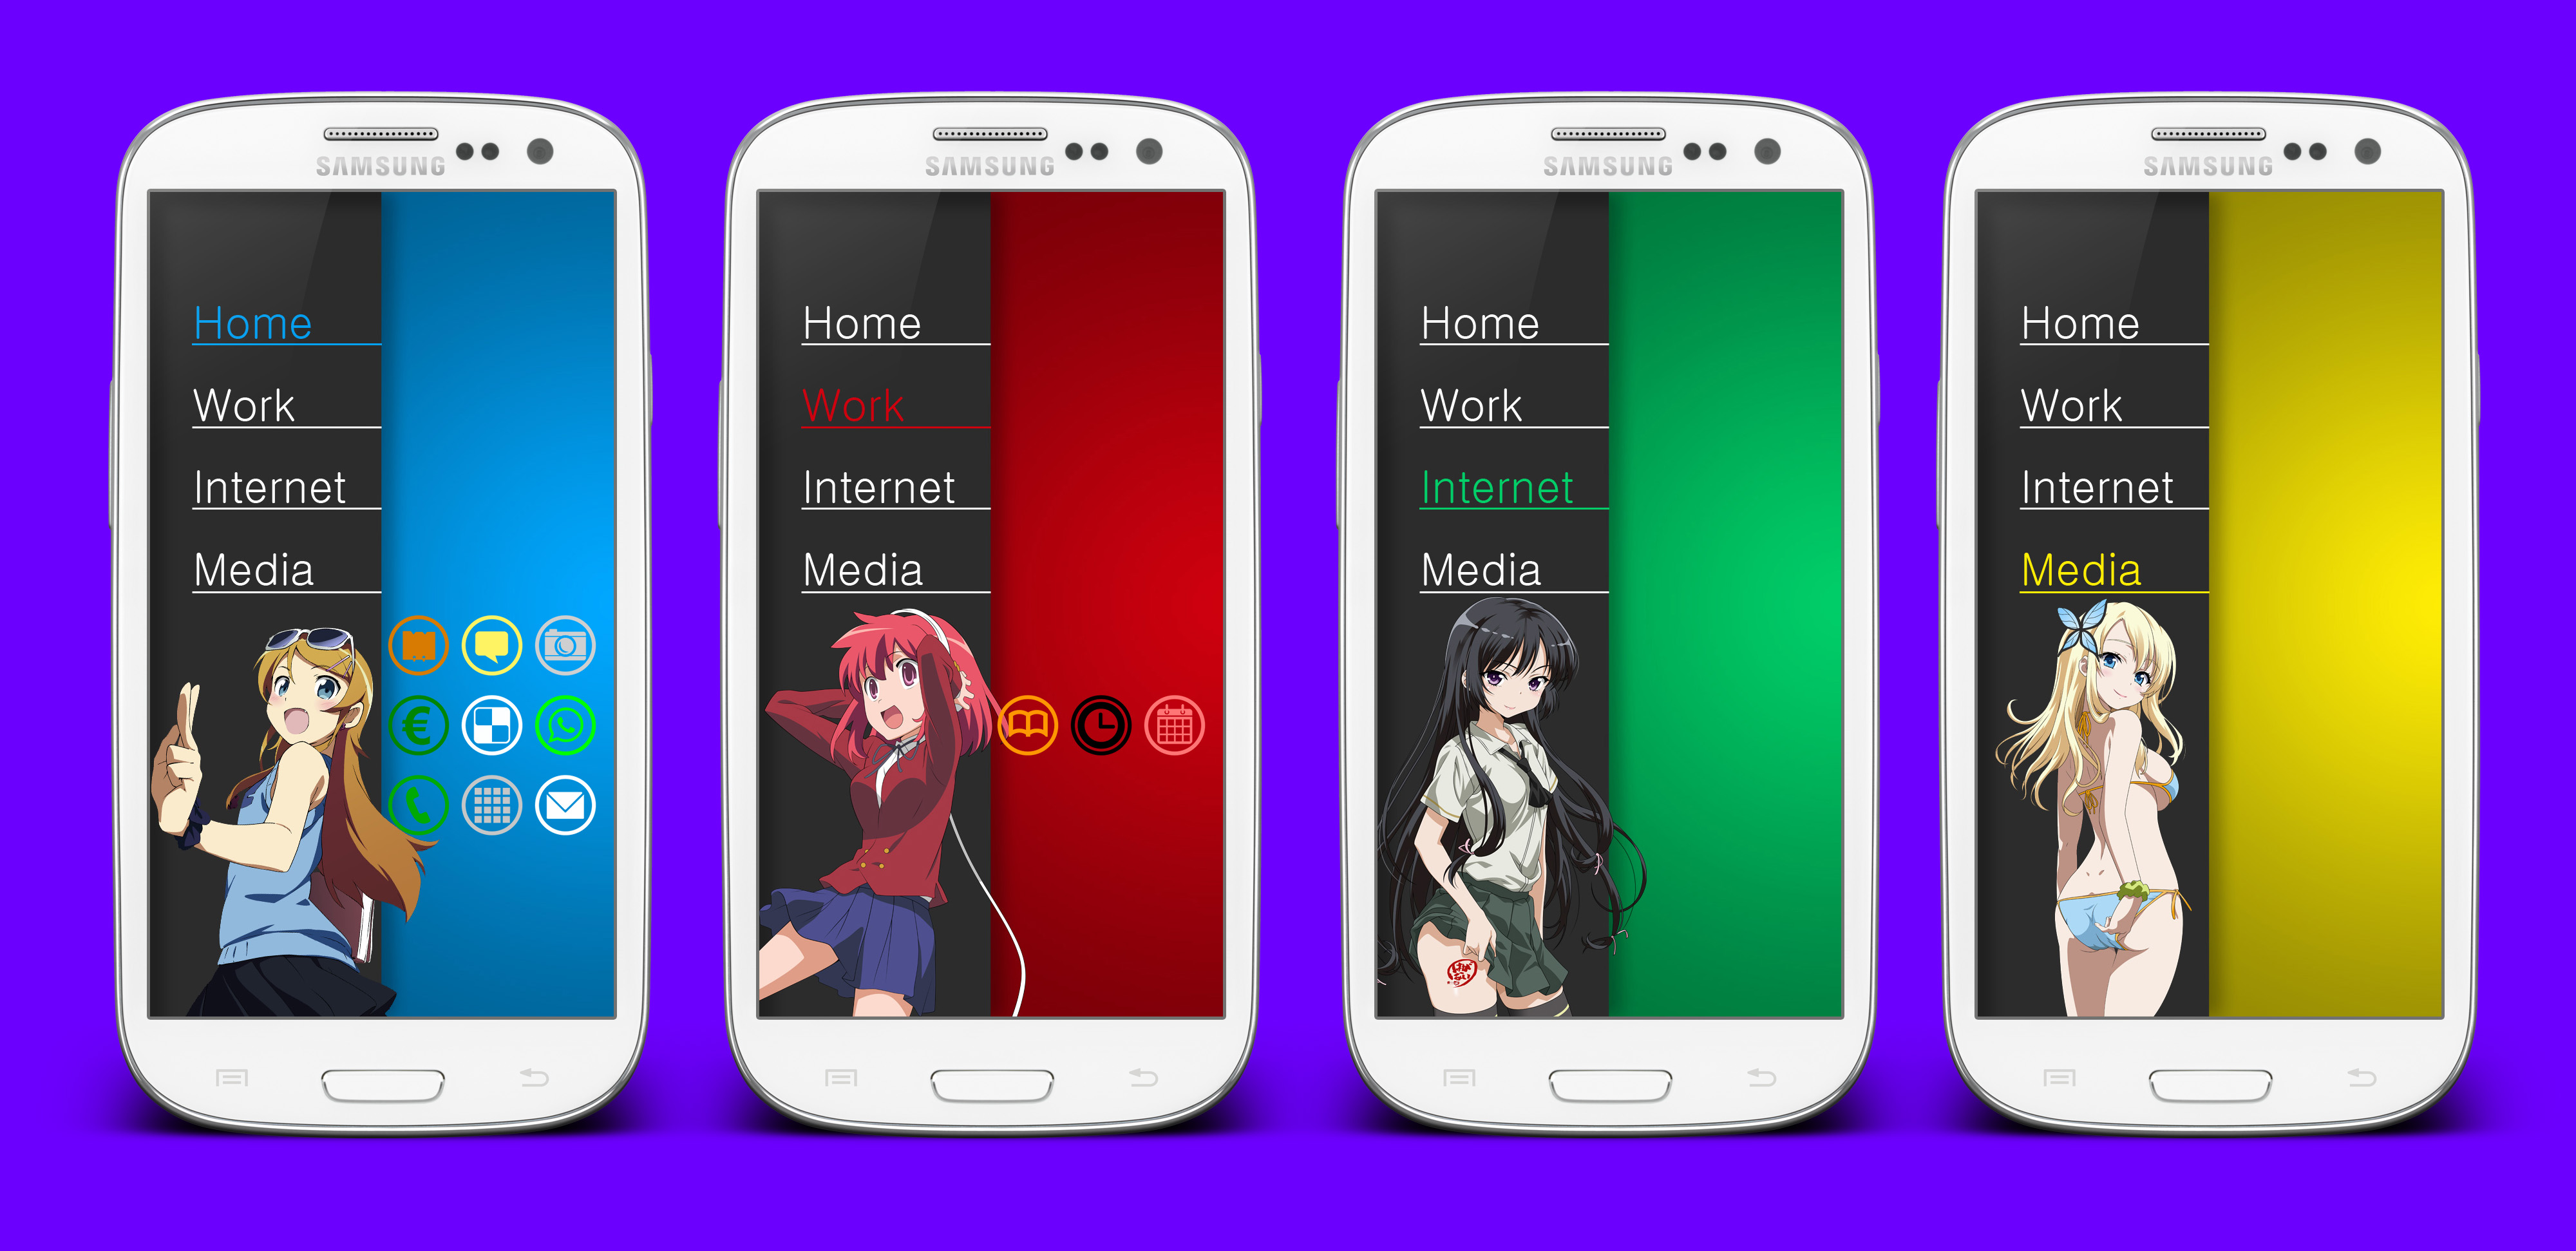 Samsung Galaxy S3 Anime Homescreens by thomasxh